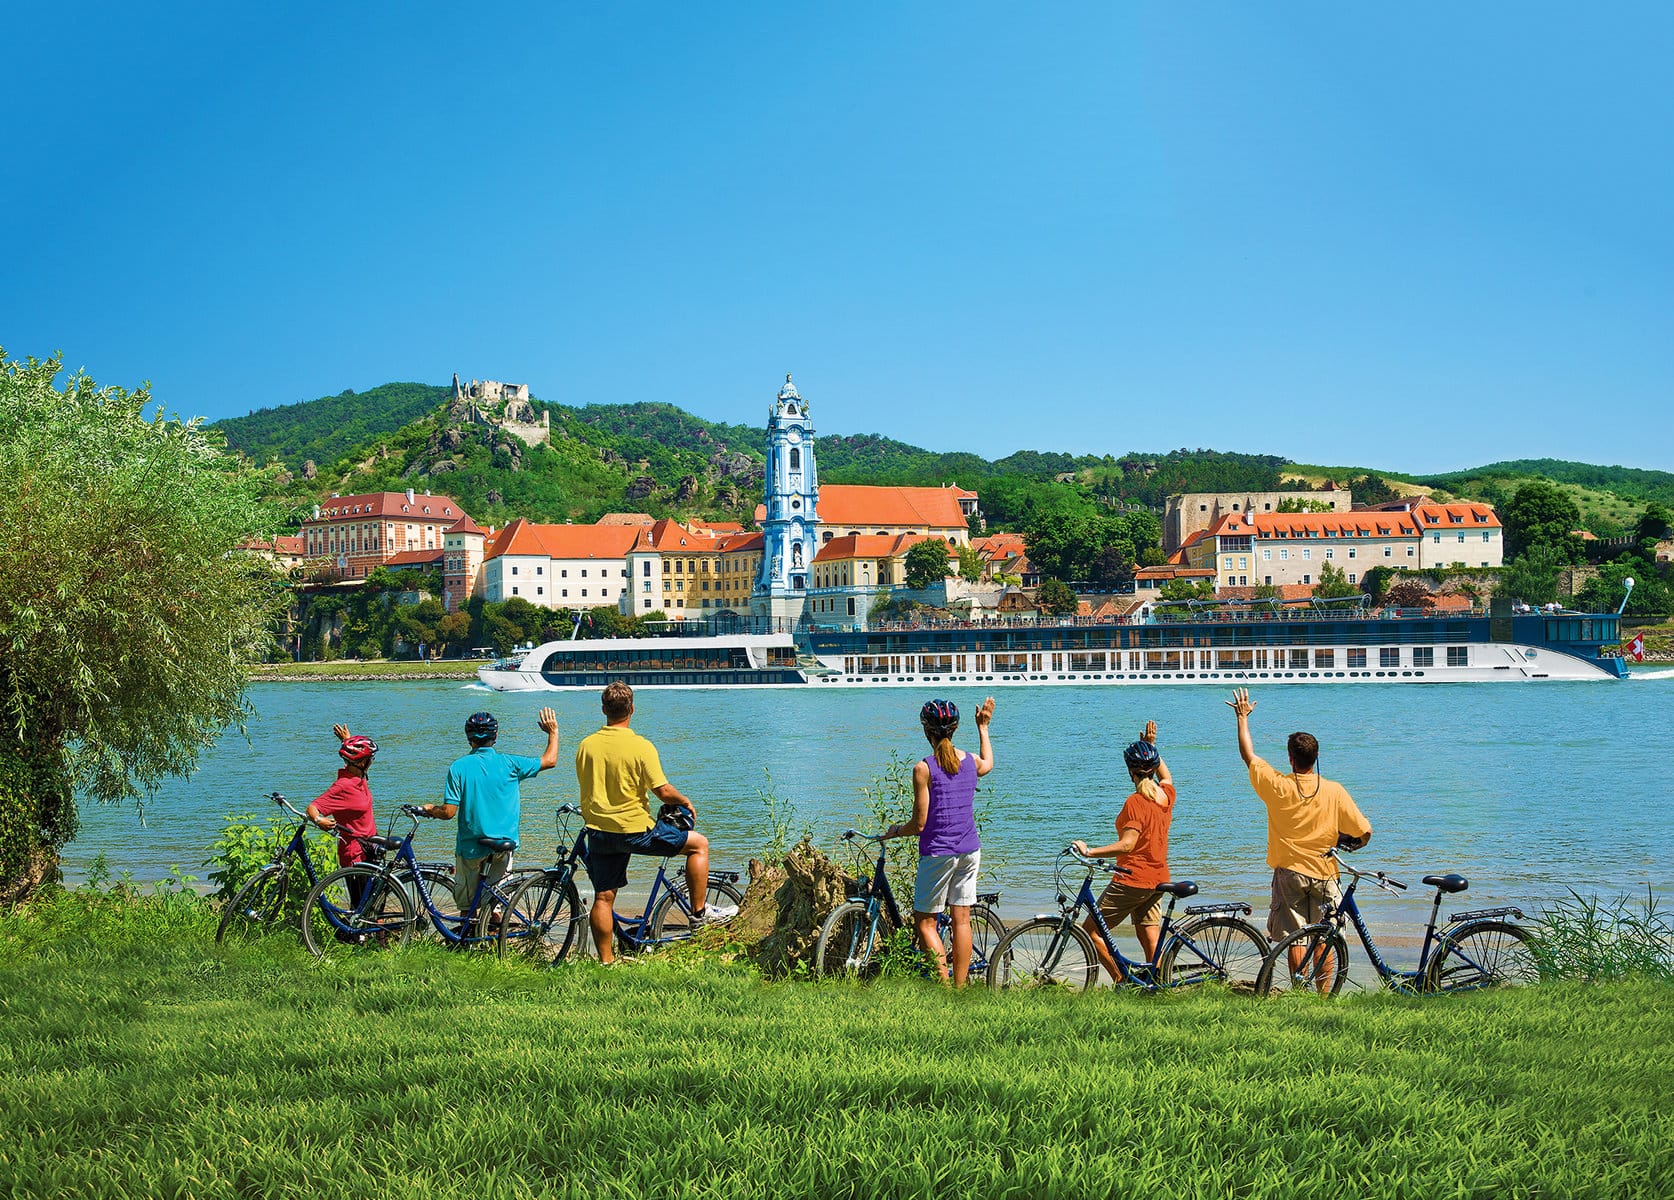 Amawaterways biking Danube before trying Amwaterways vs viking look at both river cruises